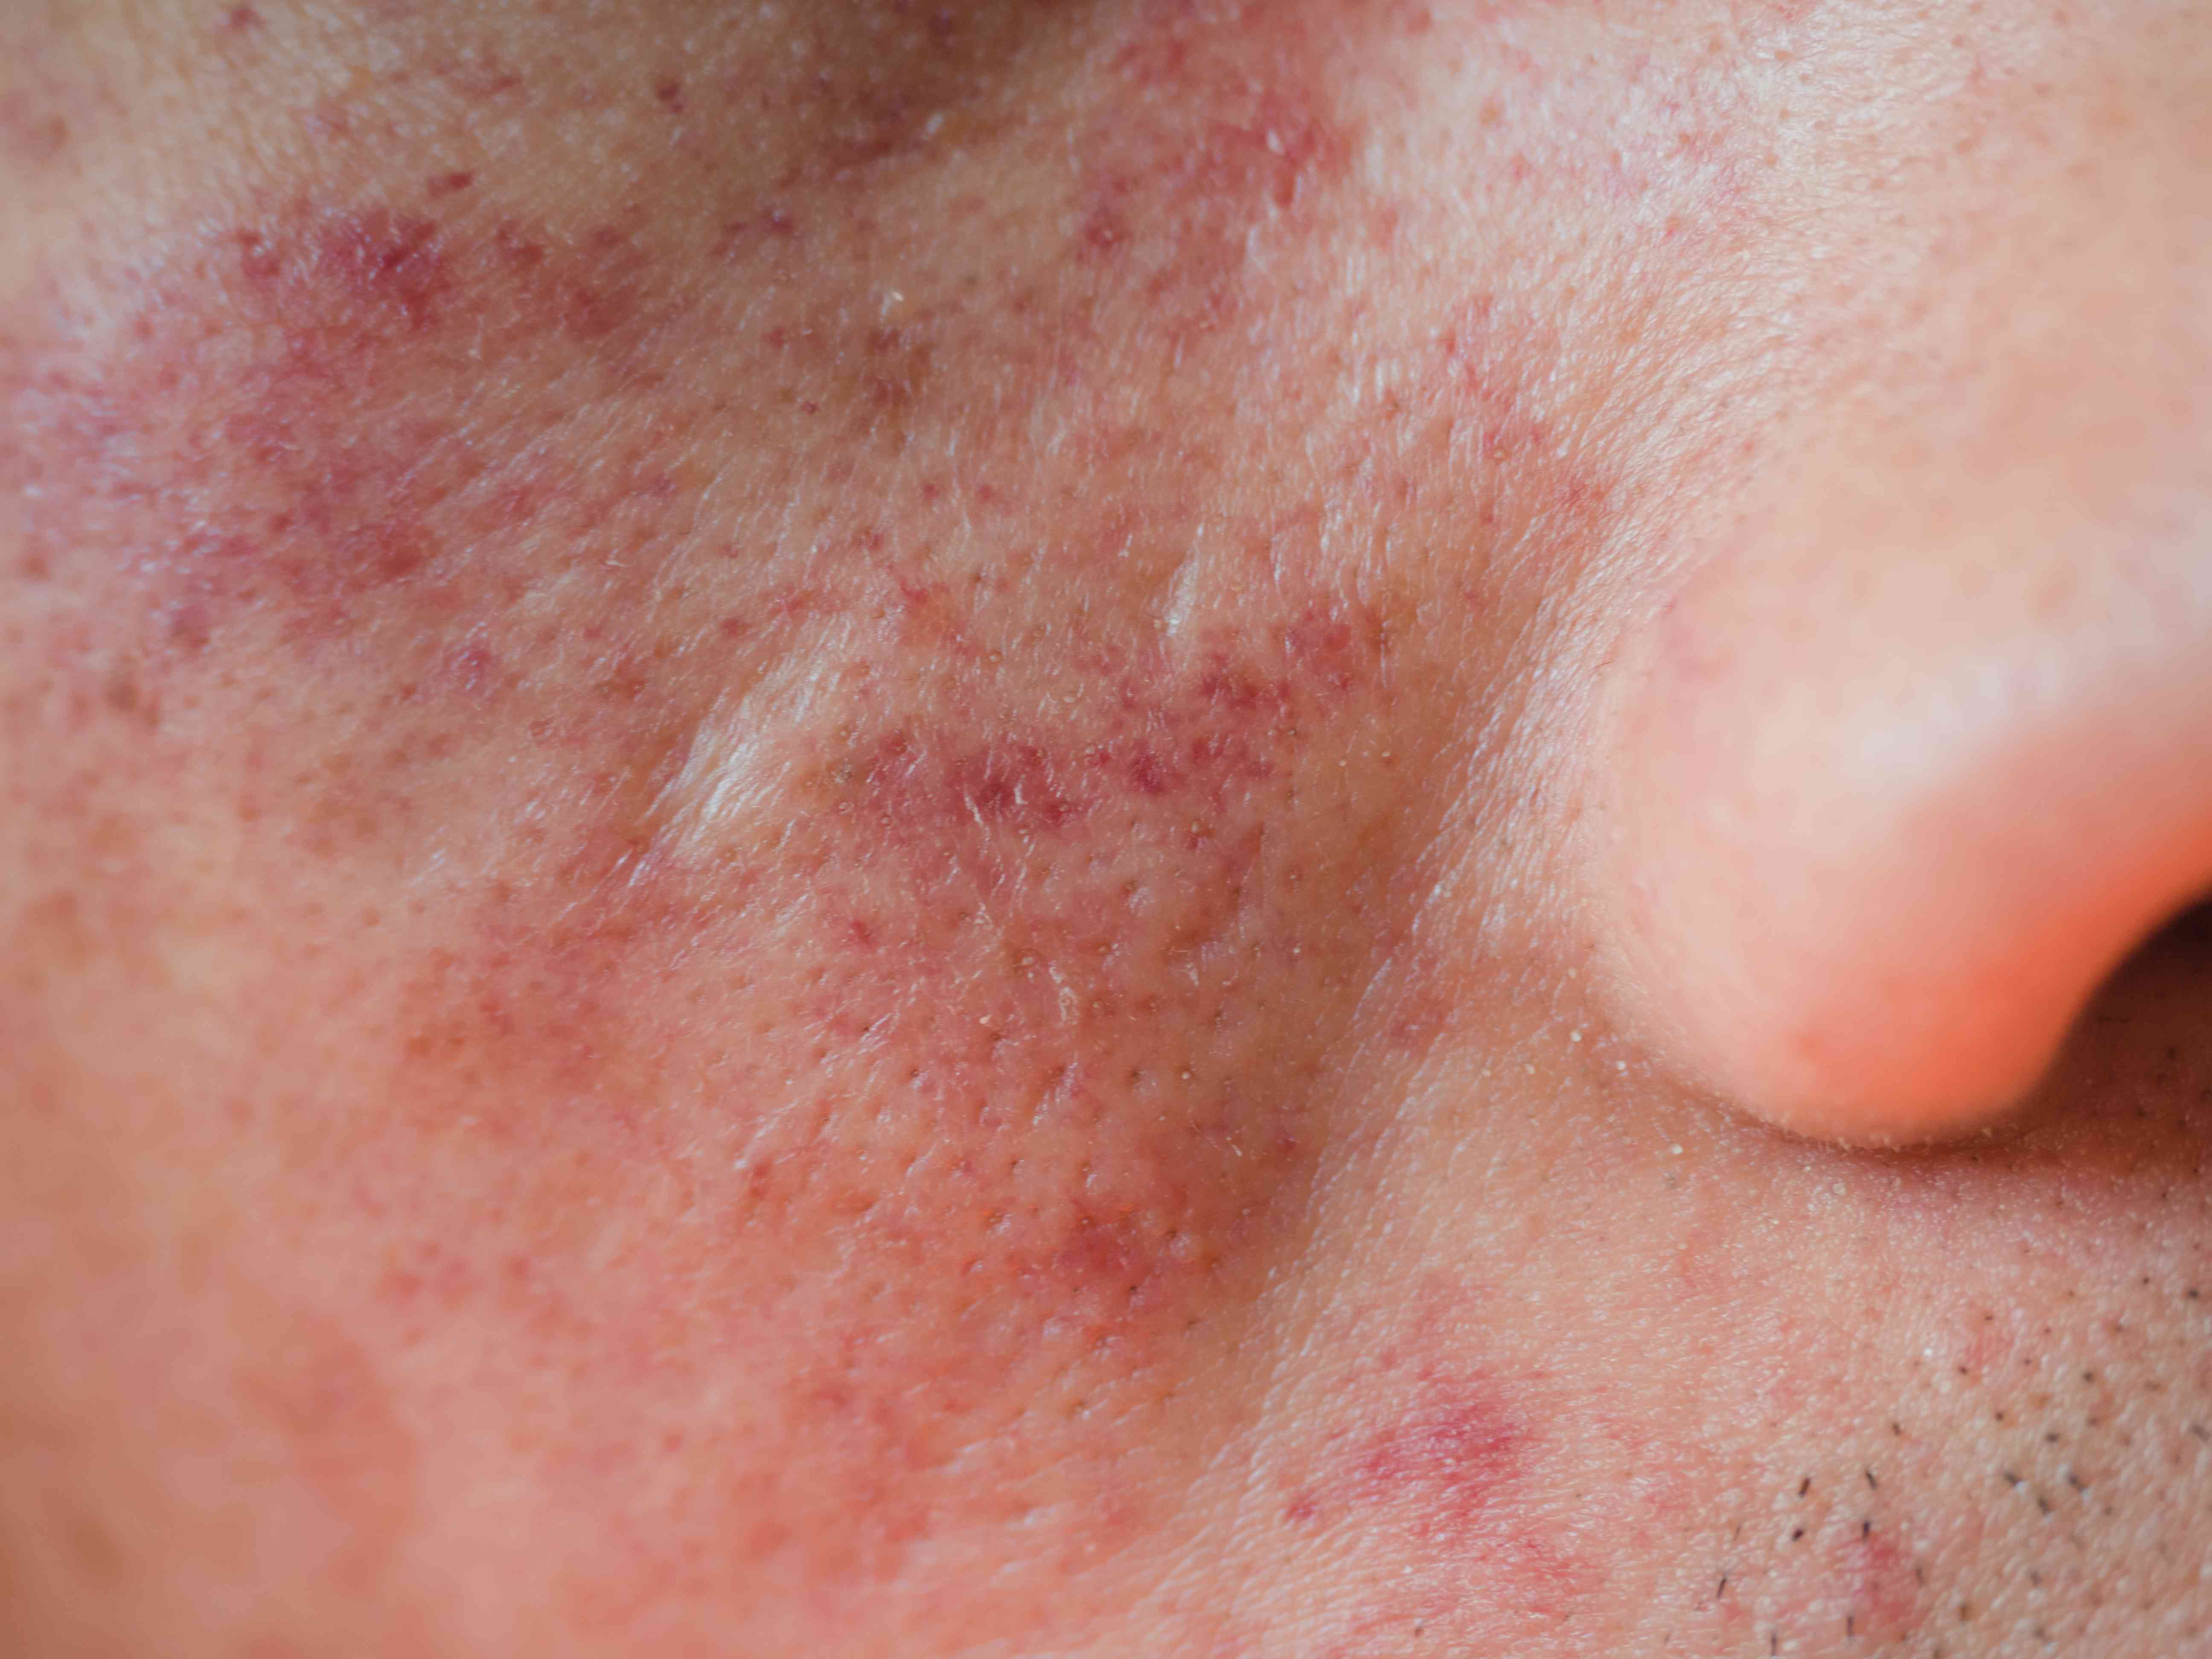 How do I know if my eczema is under control?